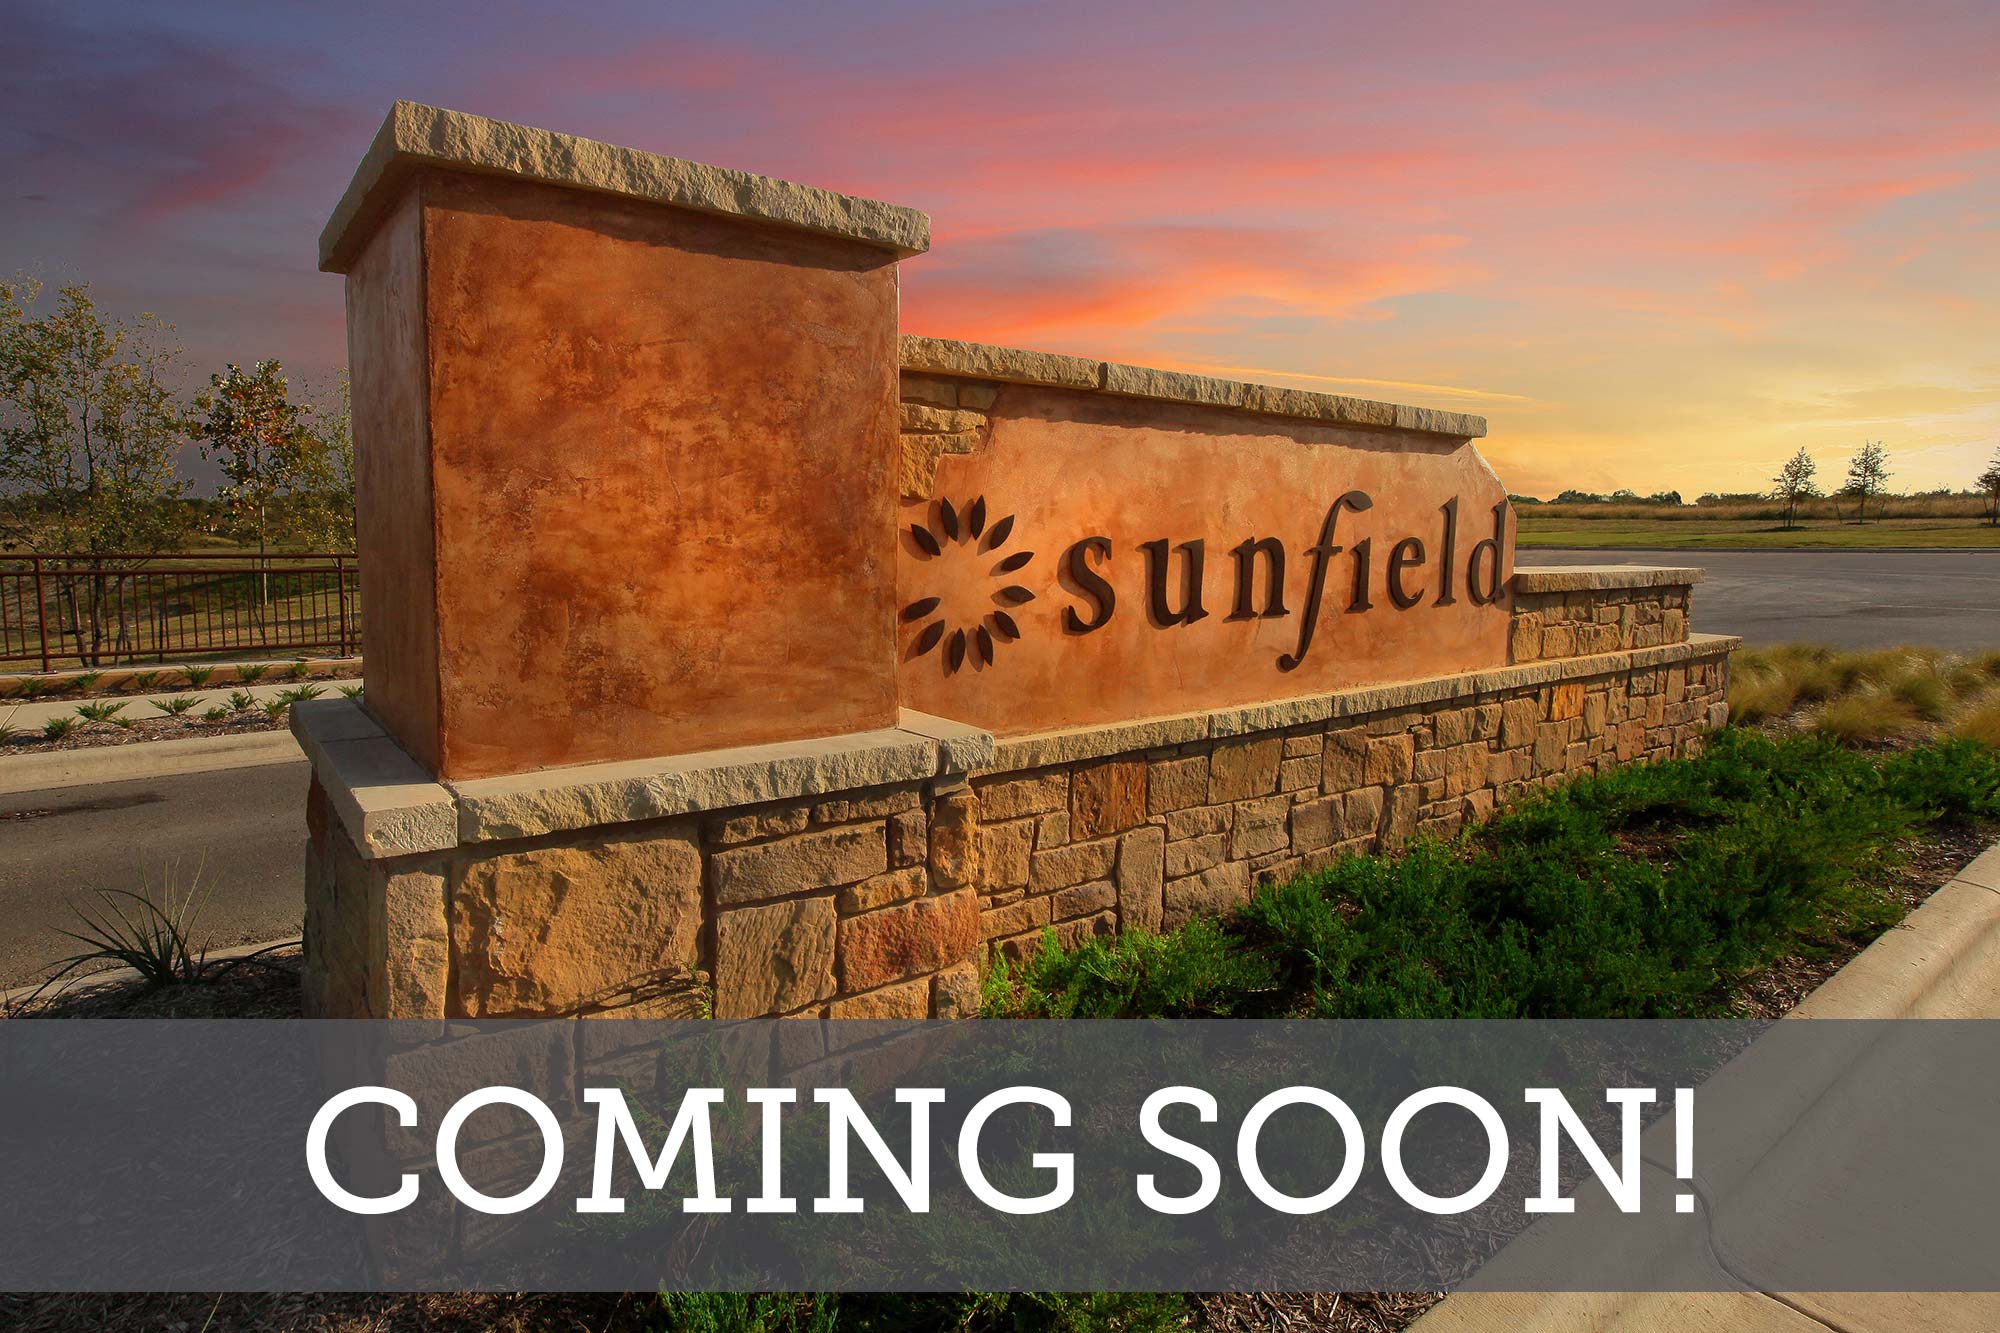 Sunfield - Coming Soon